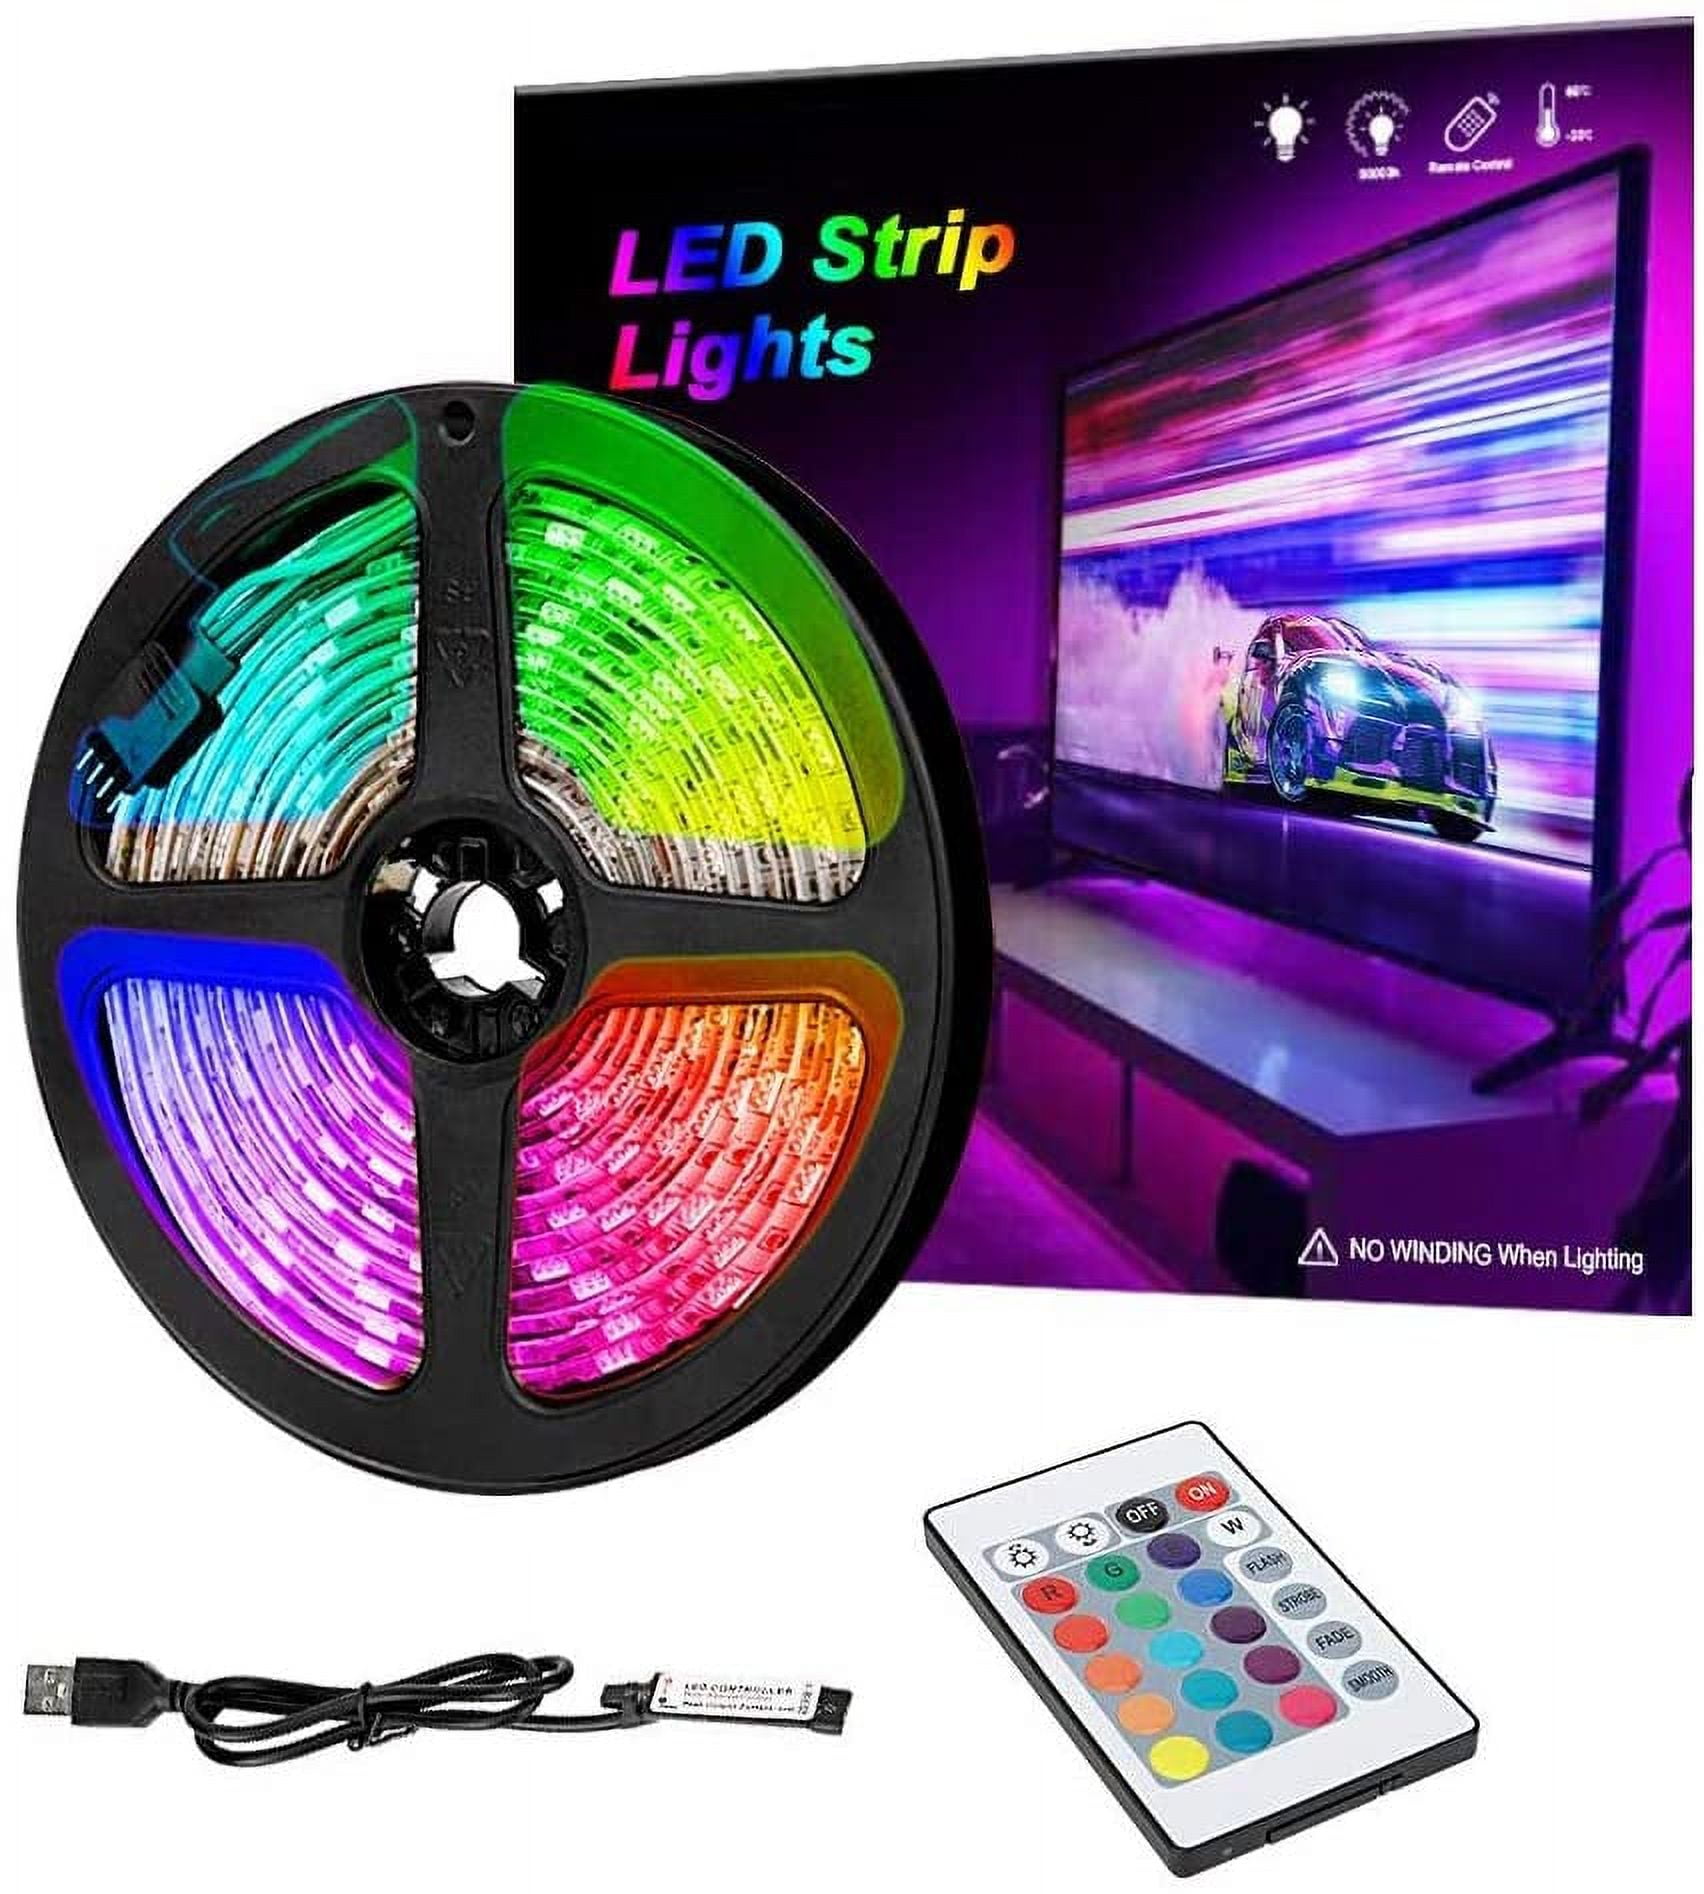 LED TV USB Backlight Kit Computer RGB LED Light Strip TV Background Lights  1M/2M 